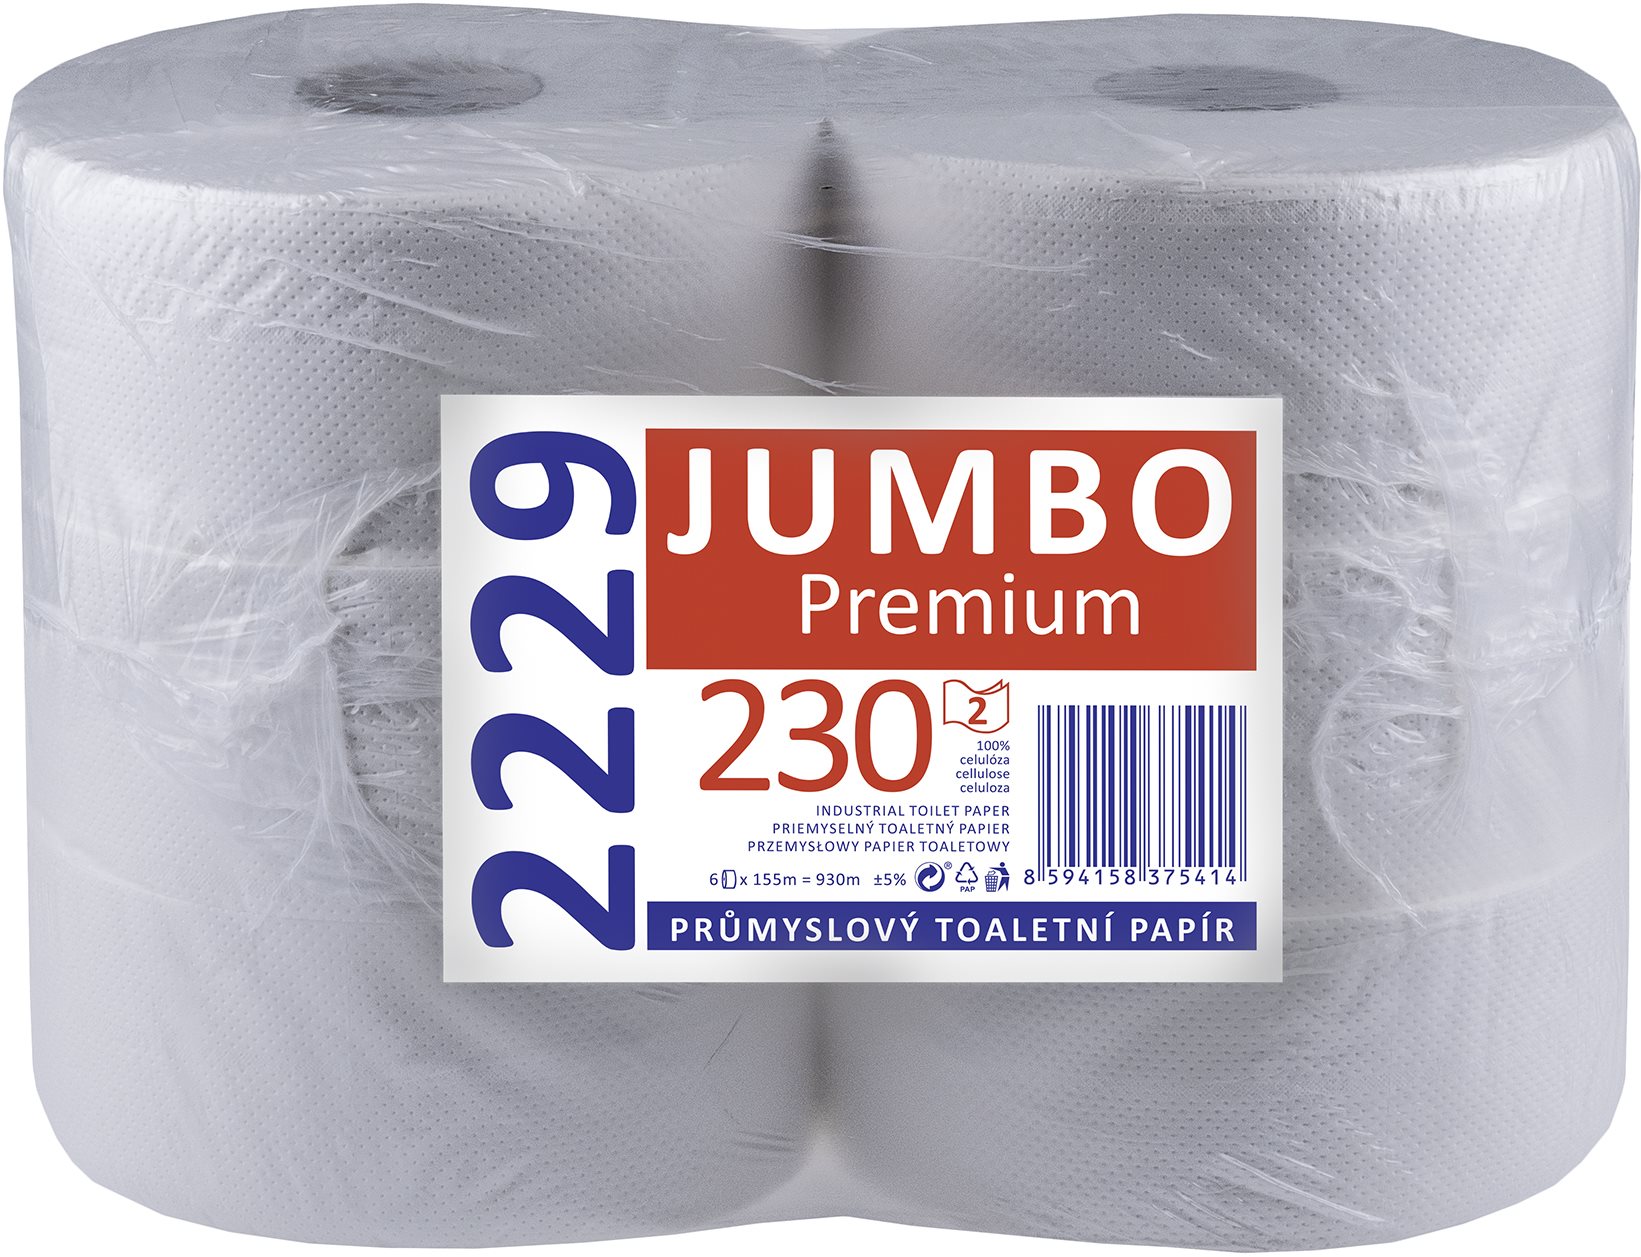 LINTEO JUMBO Premium 230 (155 m), 6 db